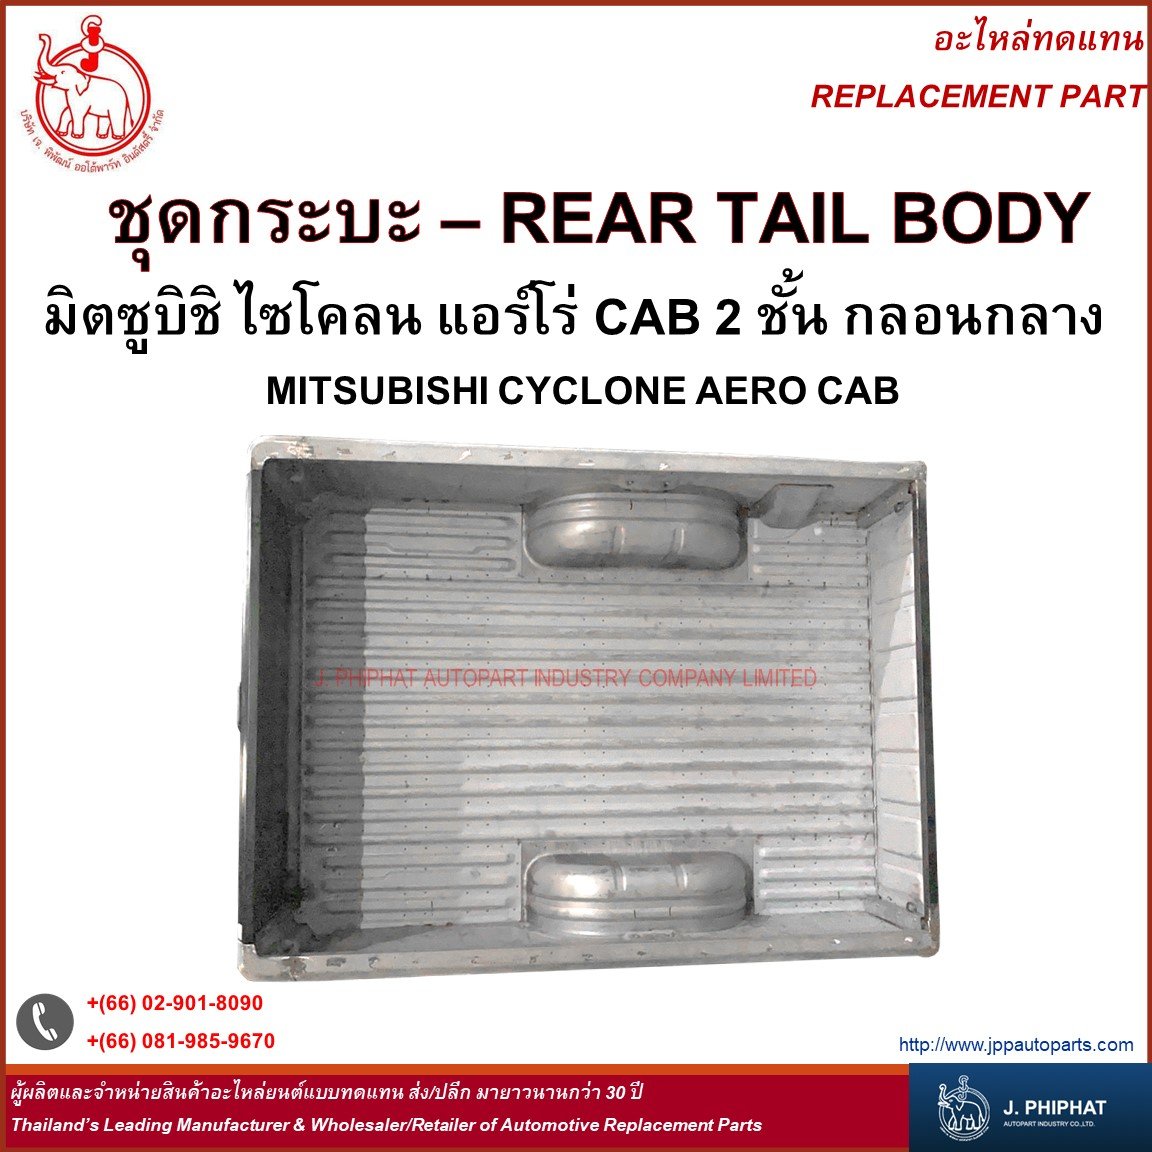 Rear Tail Body - Mitsubishi Cyclone AERO CAB